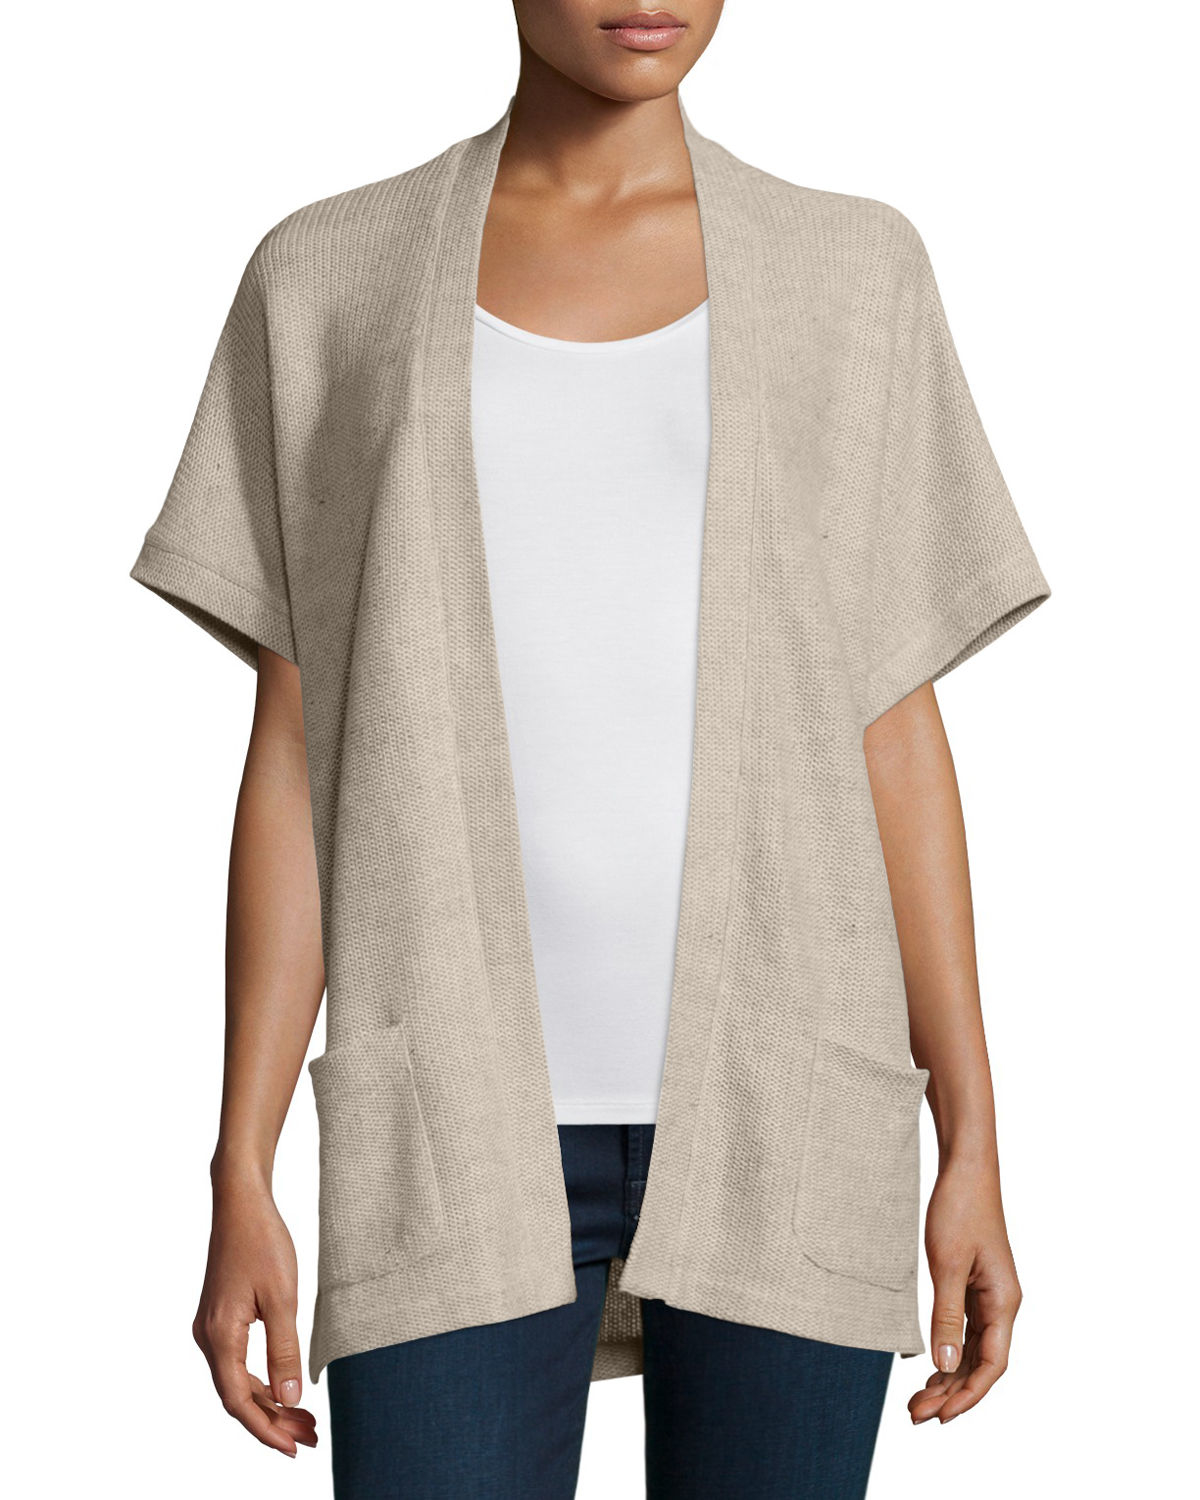 Lyst - Neiman Marcus Linen-cotton Short-sleeve Cardigan in Natural